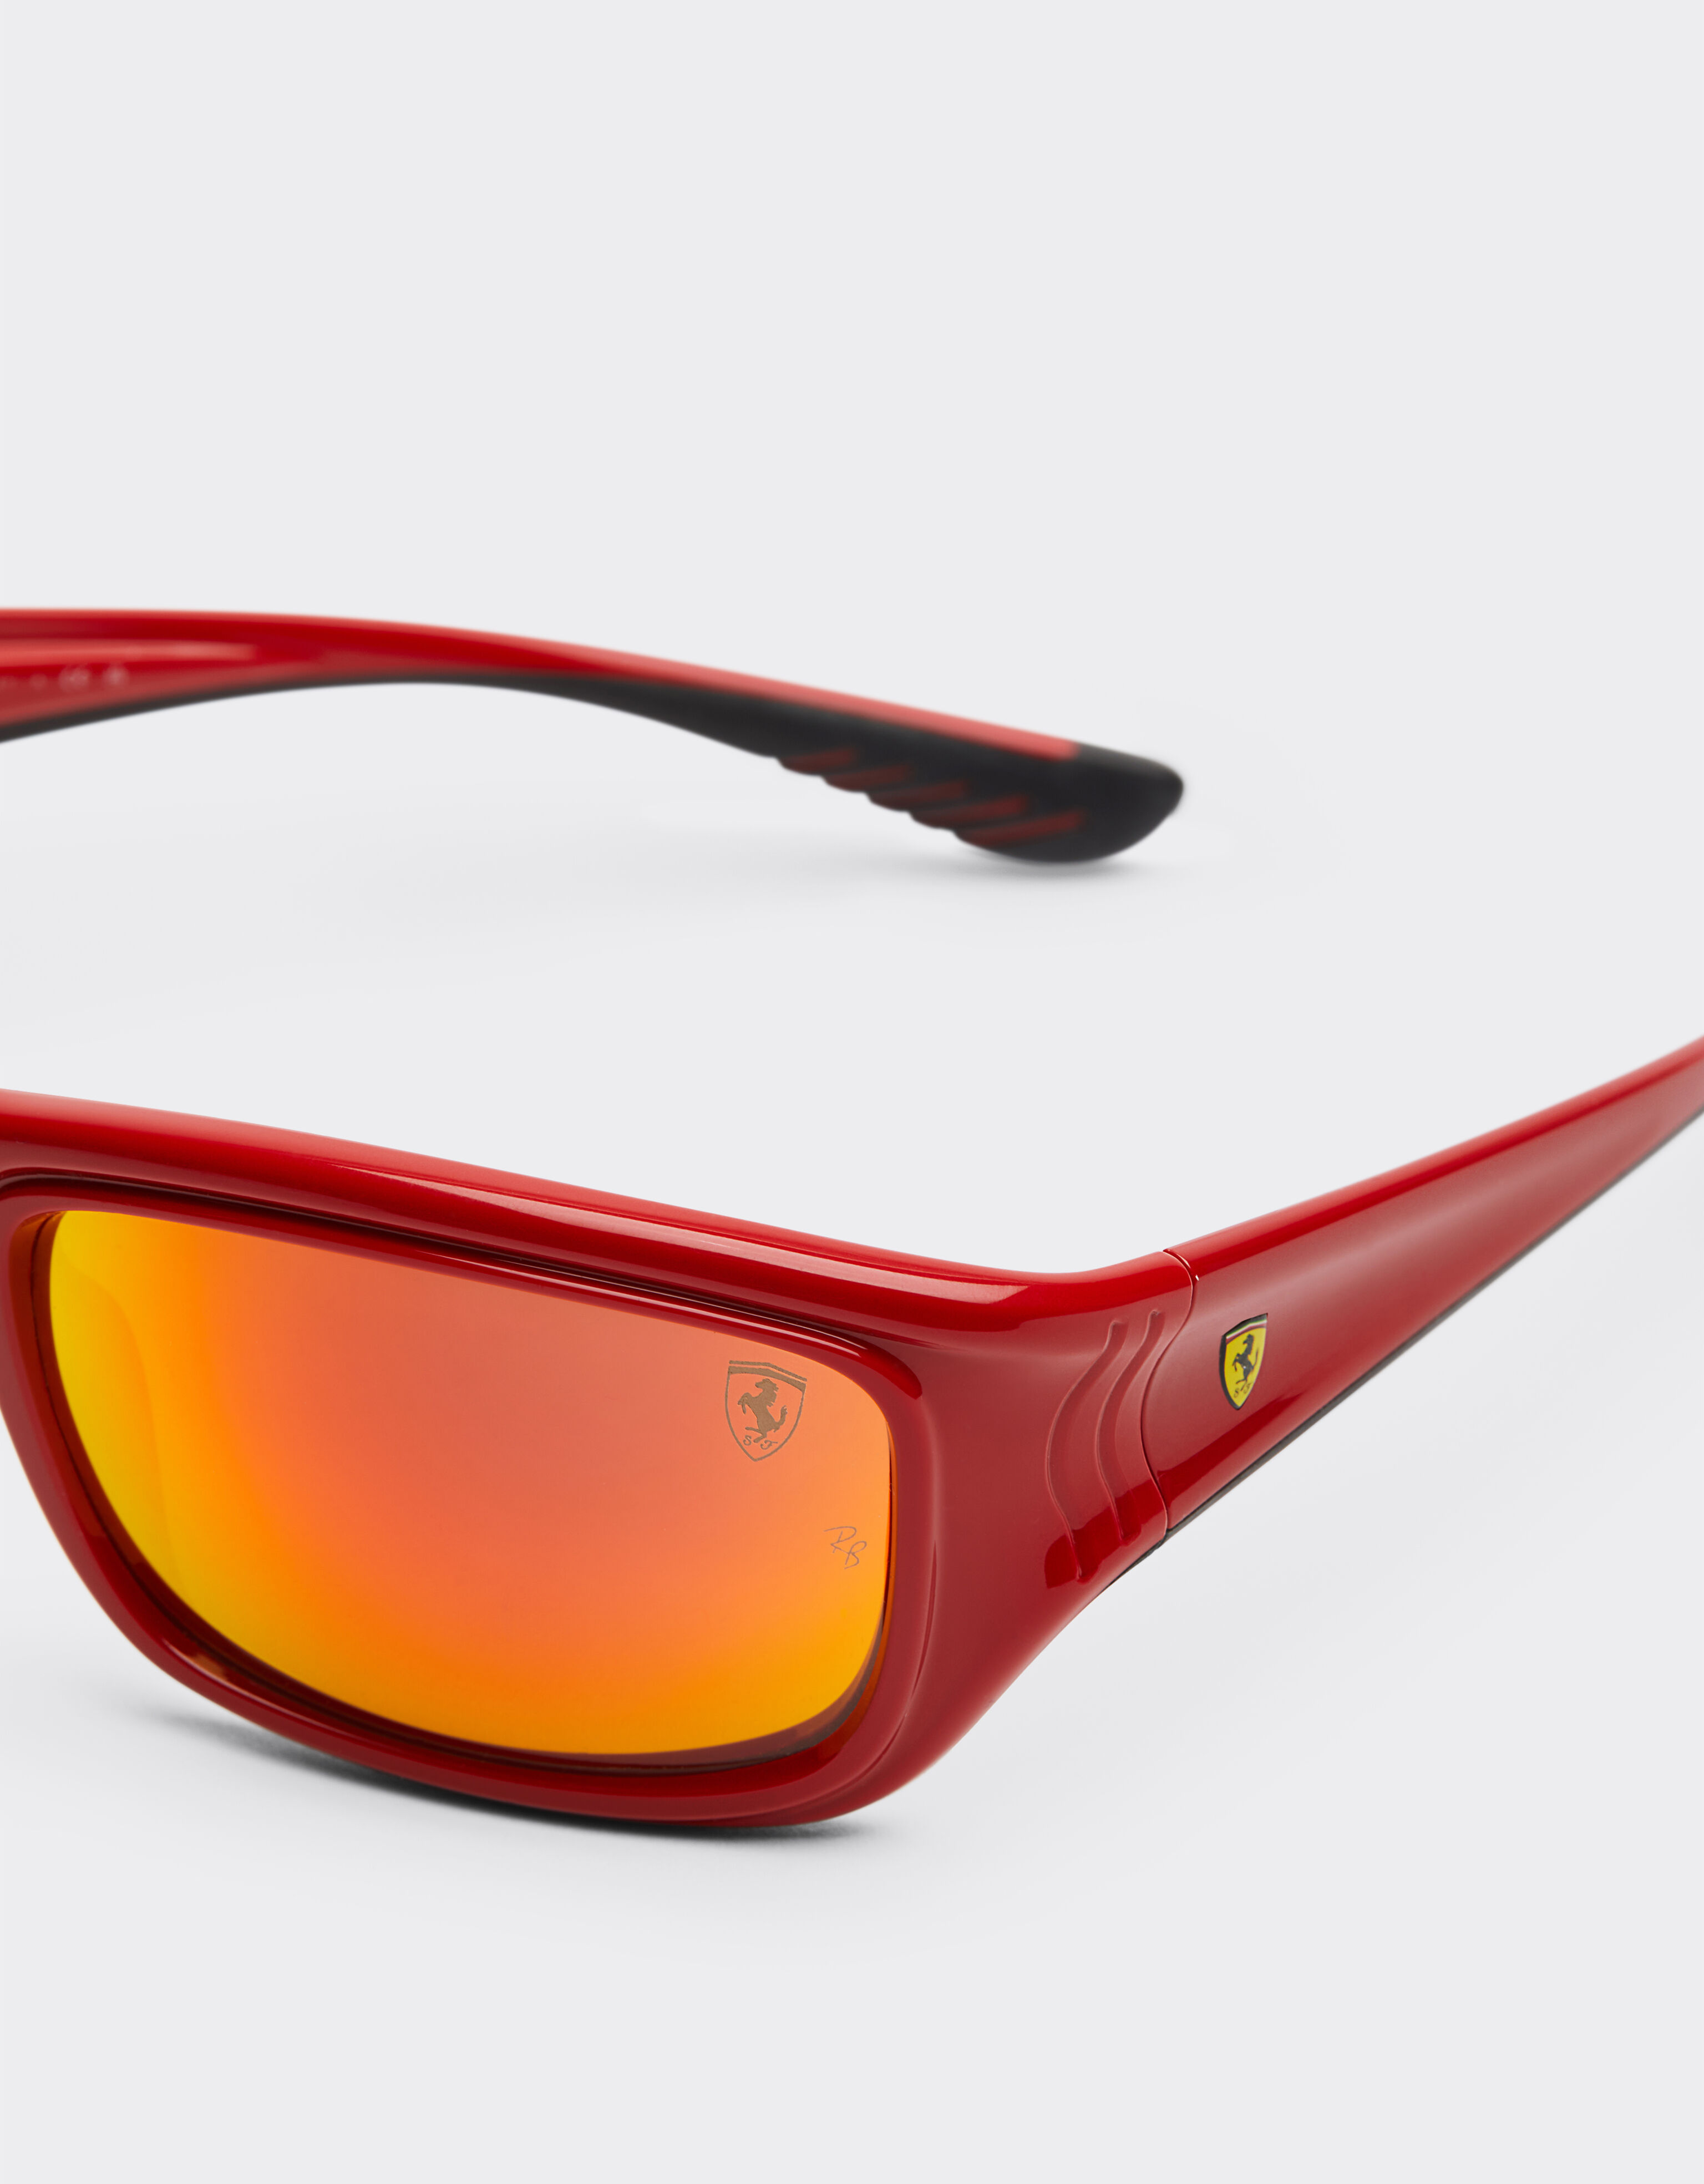 Ferrari Ray-Ban para la Scuderia Ferrari RB4405M rojo/negro con lentes marrones con espejo naranja Rojo F0841f